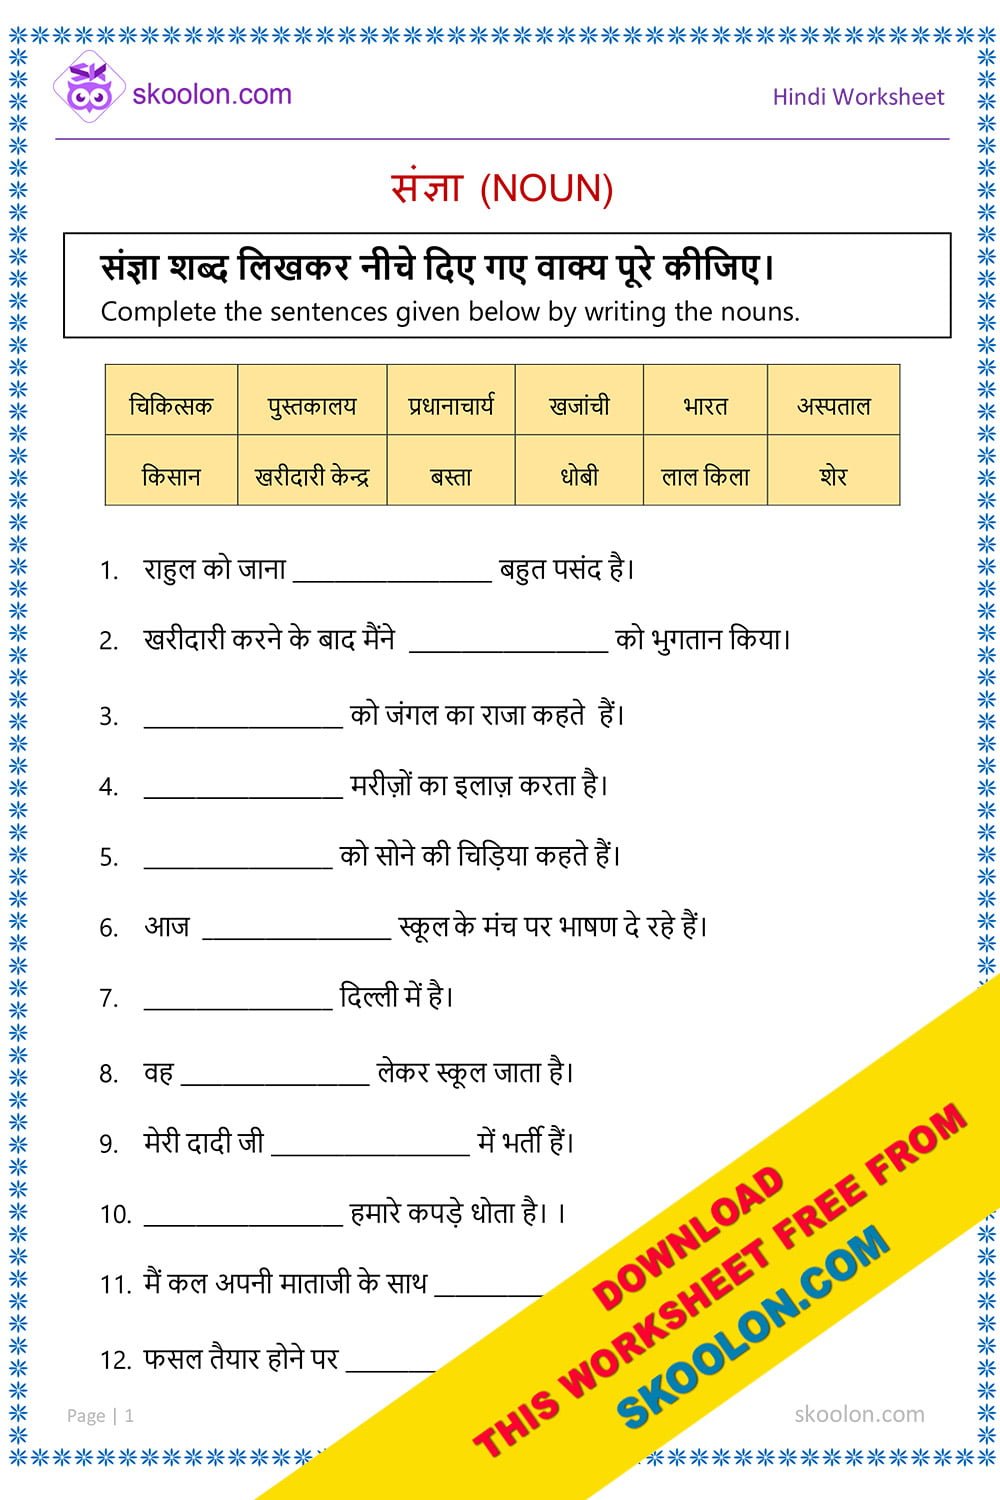 Hindi Grammar Sangya Worksheet with Answers Archives - skoolon.com